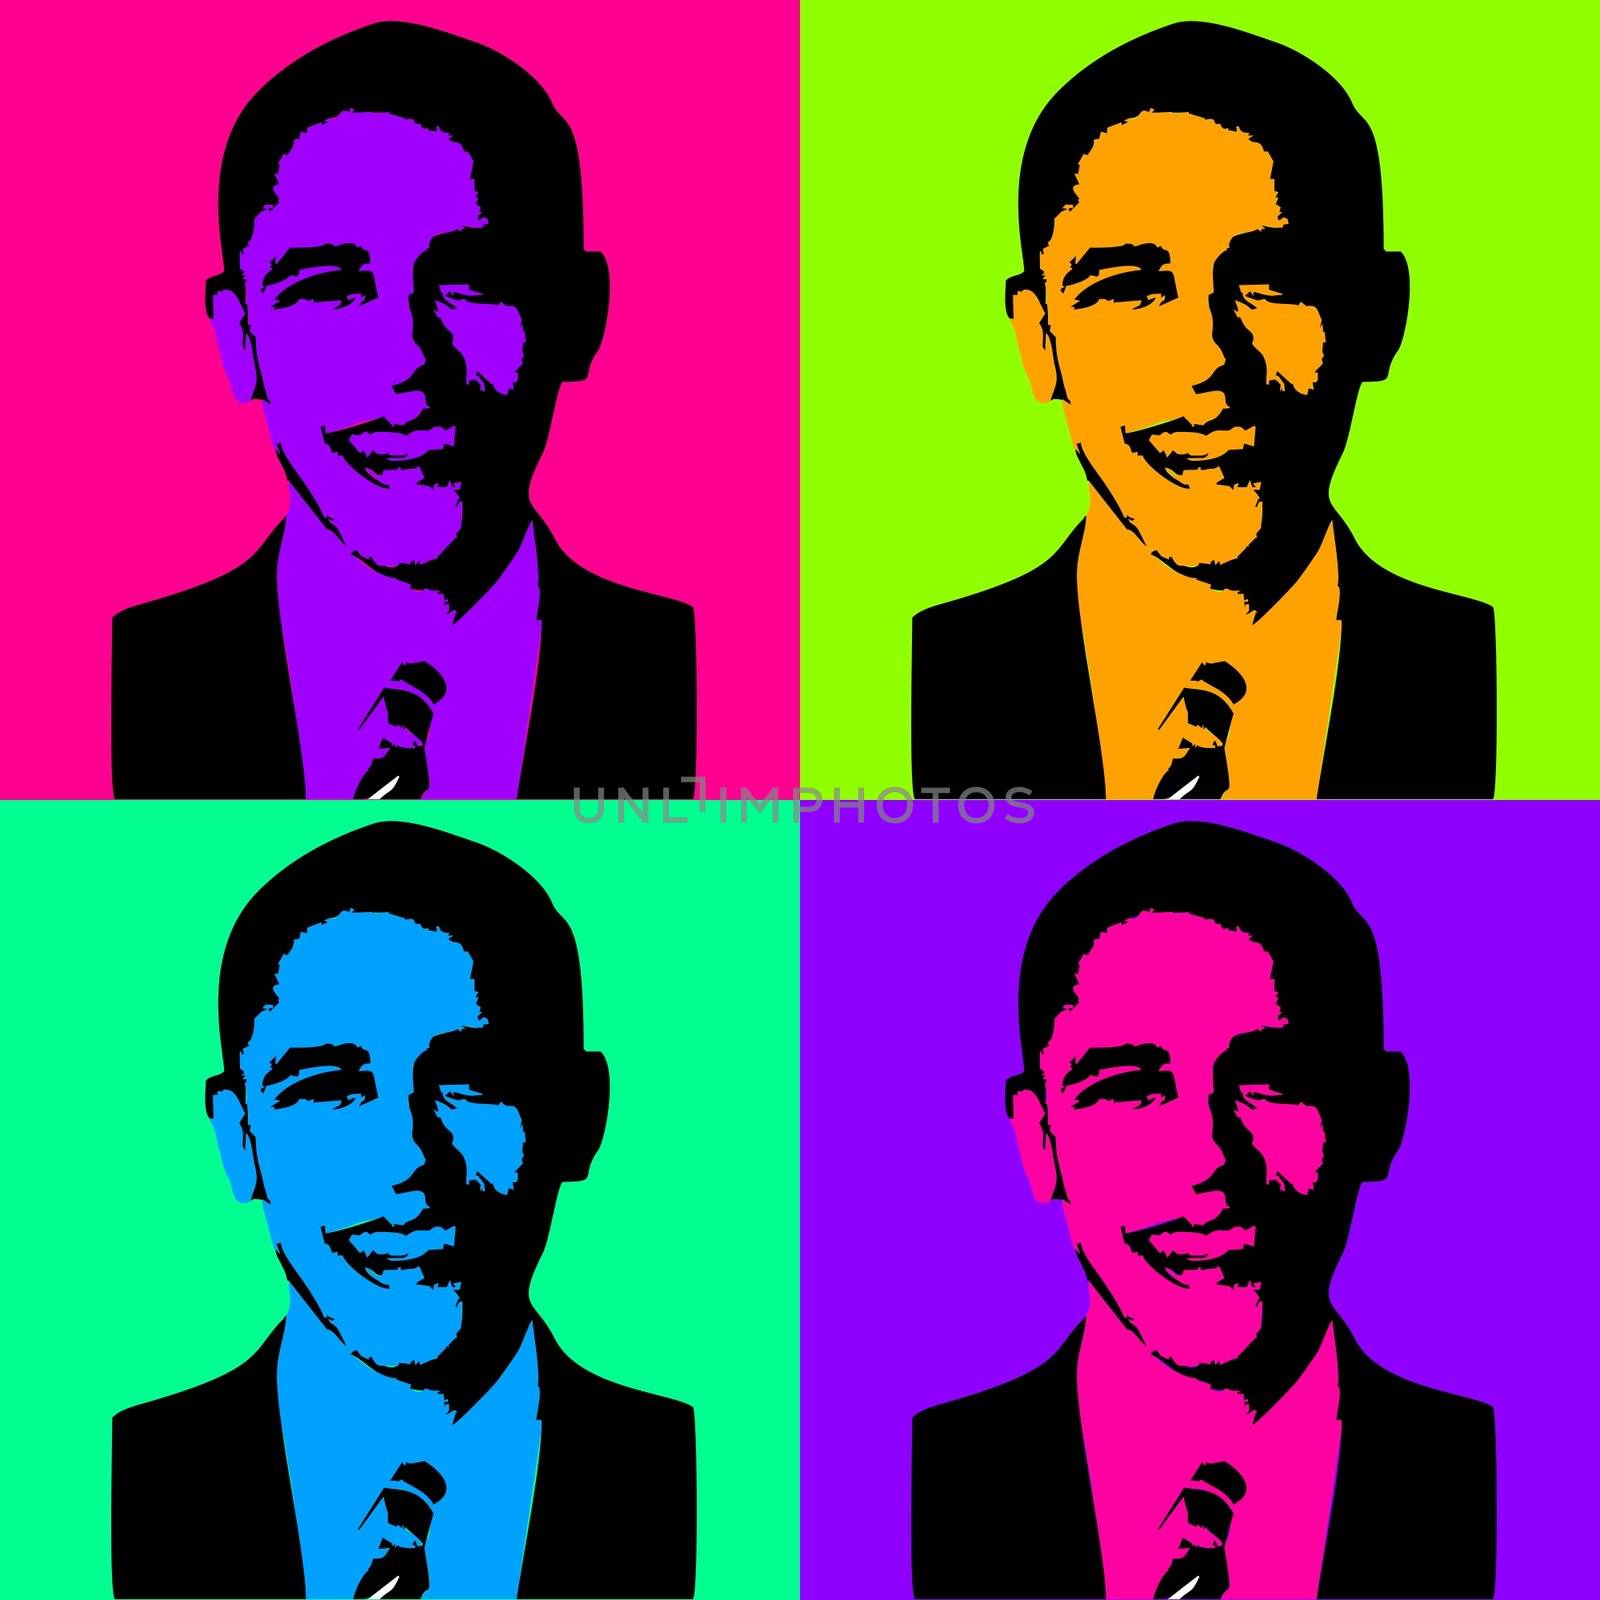 President Obama in pop art style